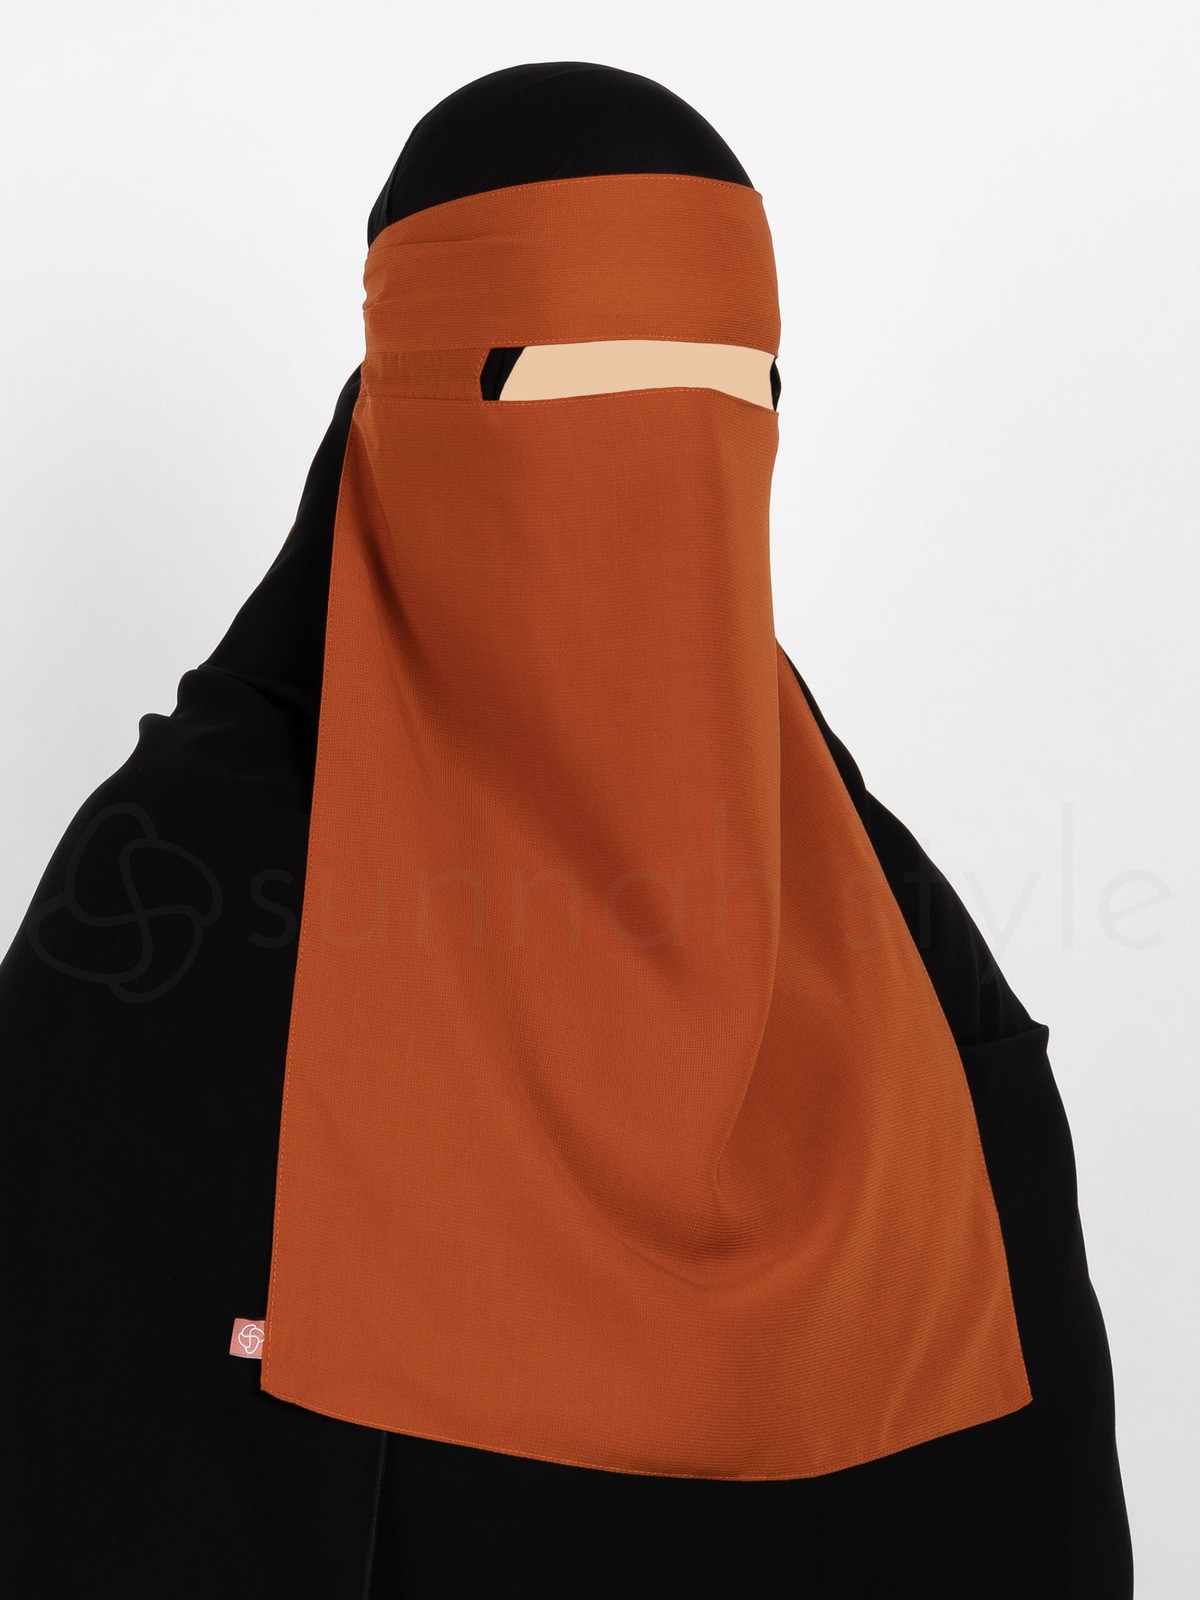 Sunnah Style - No-Pinch One Layer Niqab (Autumn)